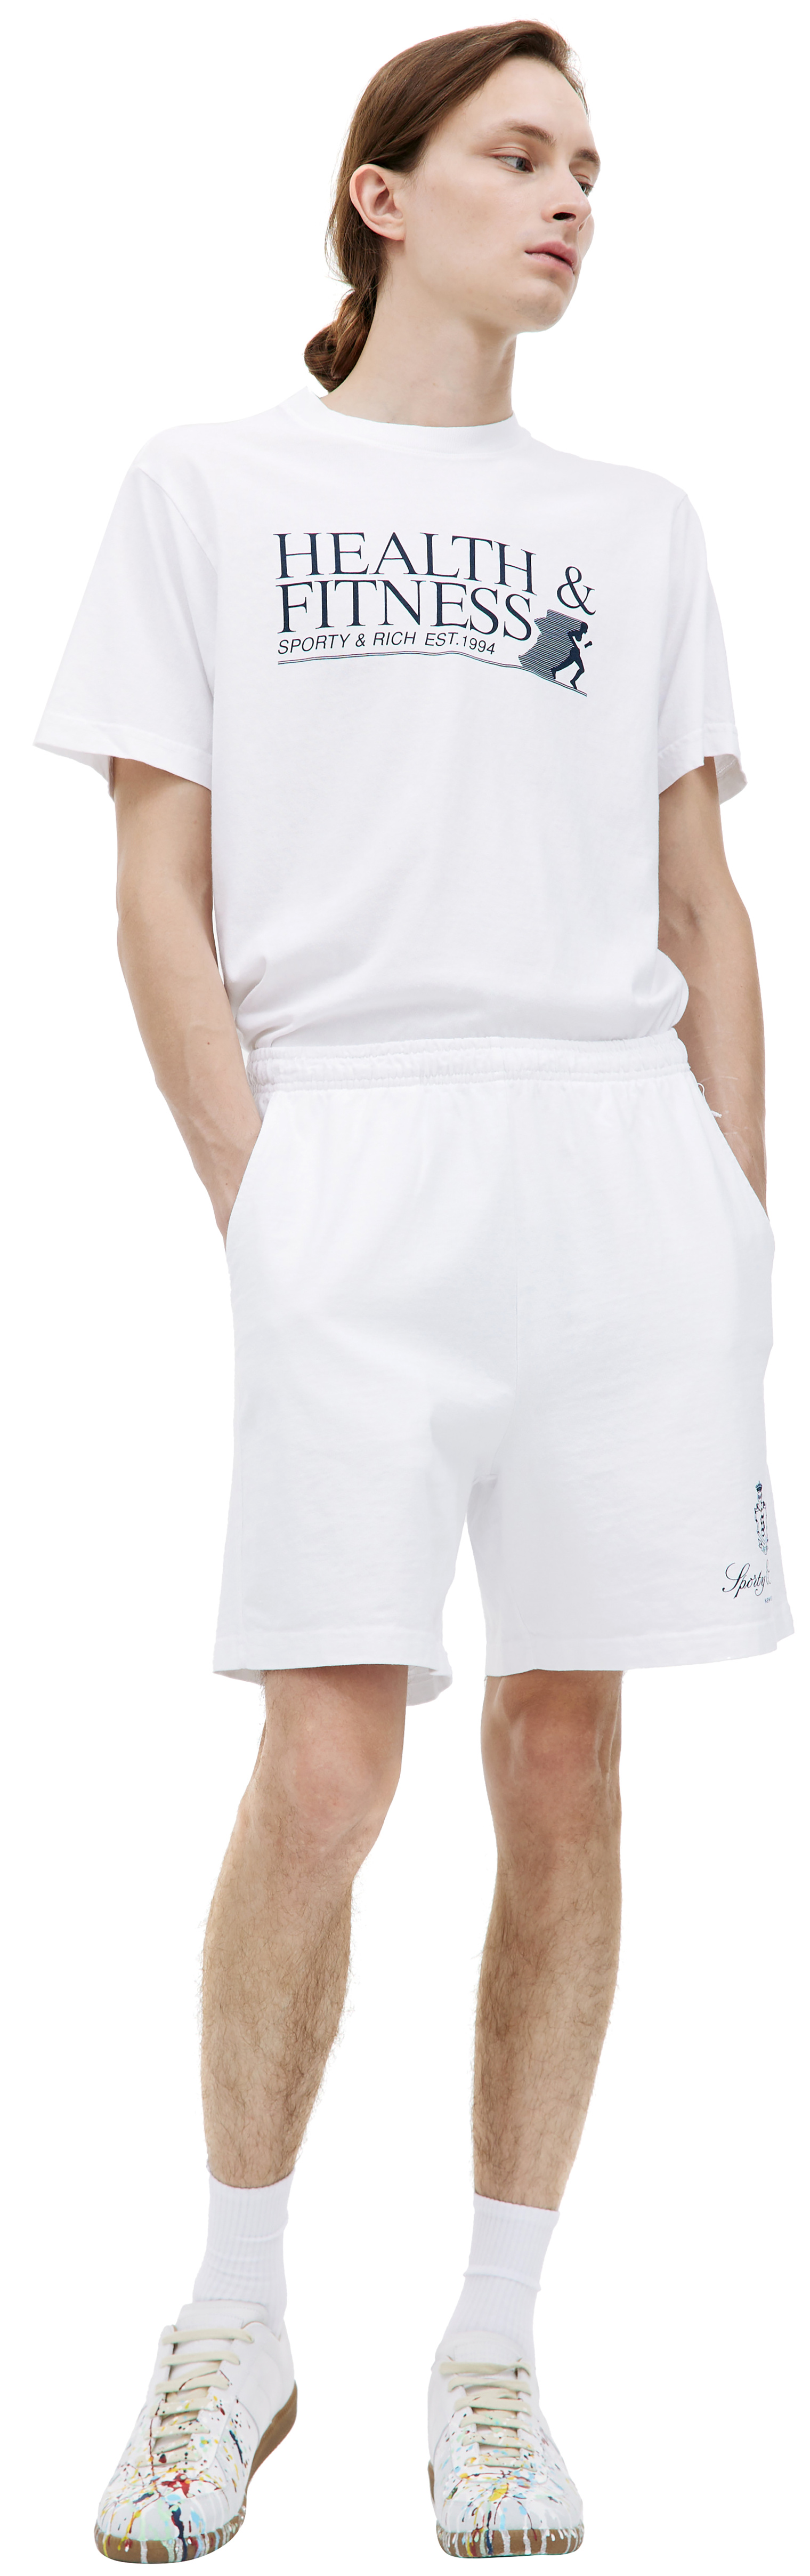 SPORTY & RICH White Vendome shorts